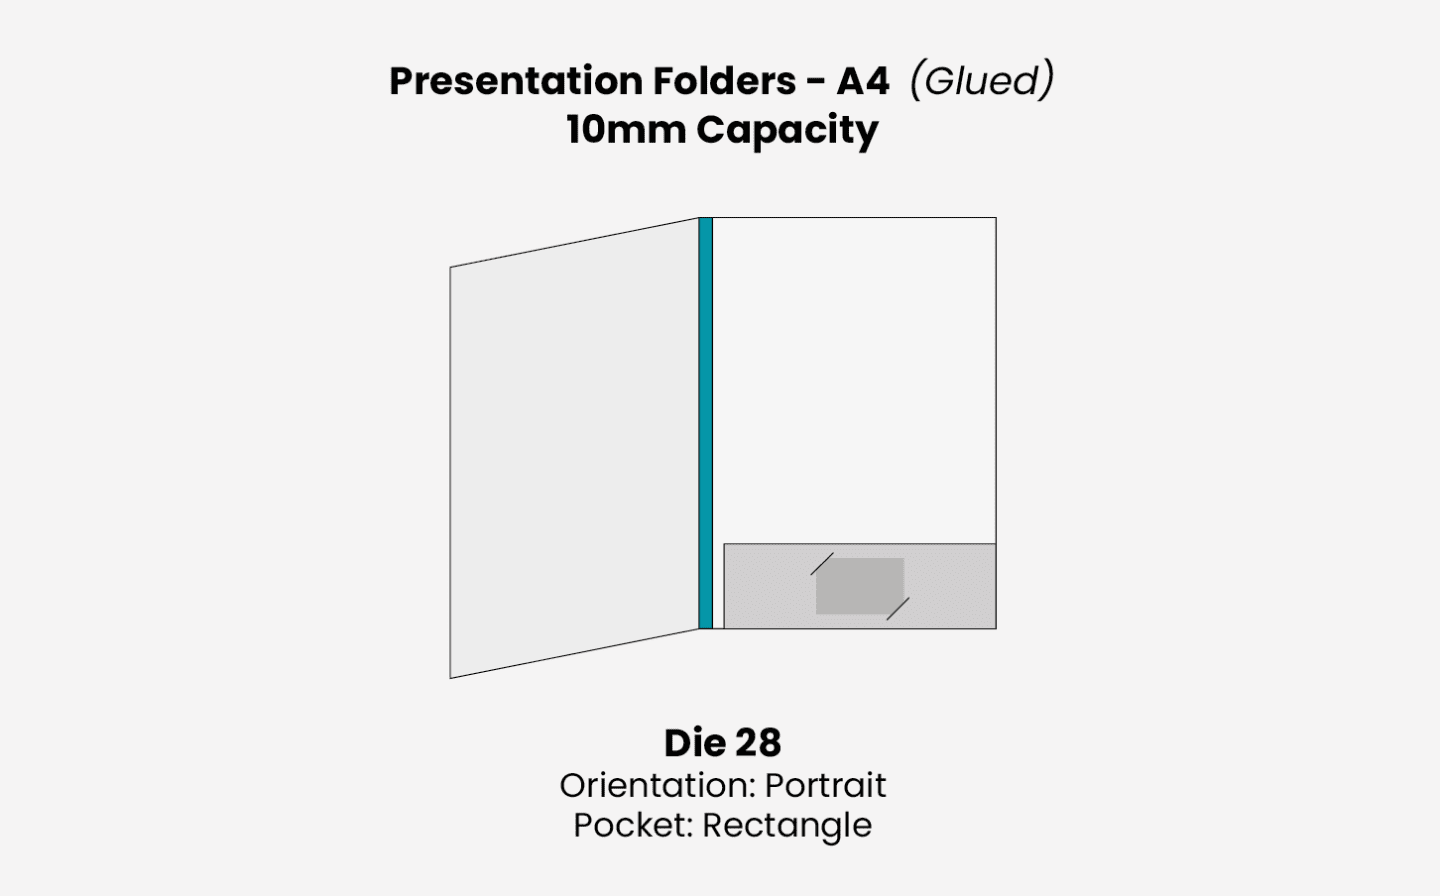 A4 Presentation Folder - Glued - 10mm Capacity